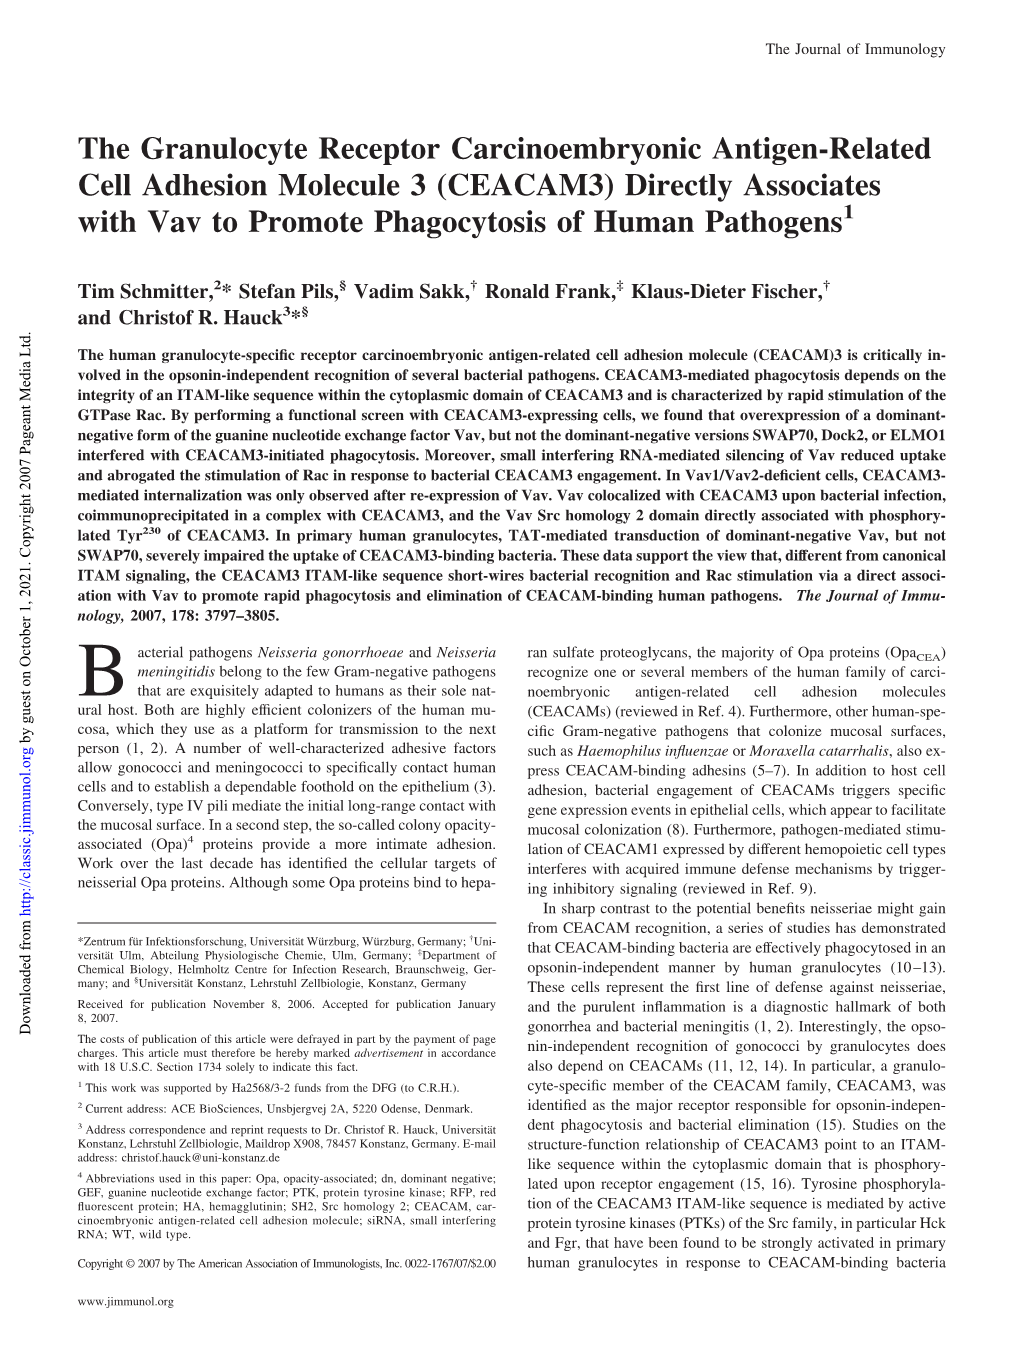 CEACAM3) Directly Associates with Vav to Promote Phagocytosis of Human Pathogens1